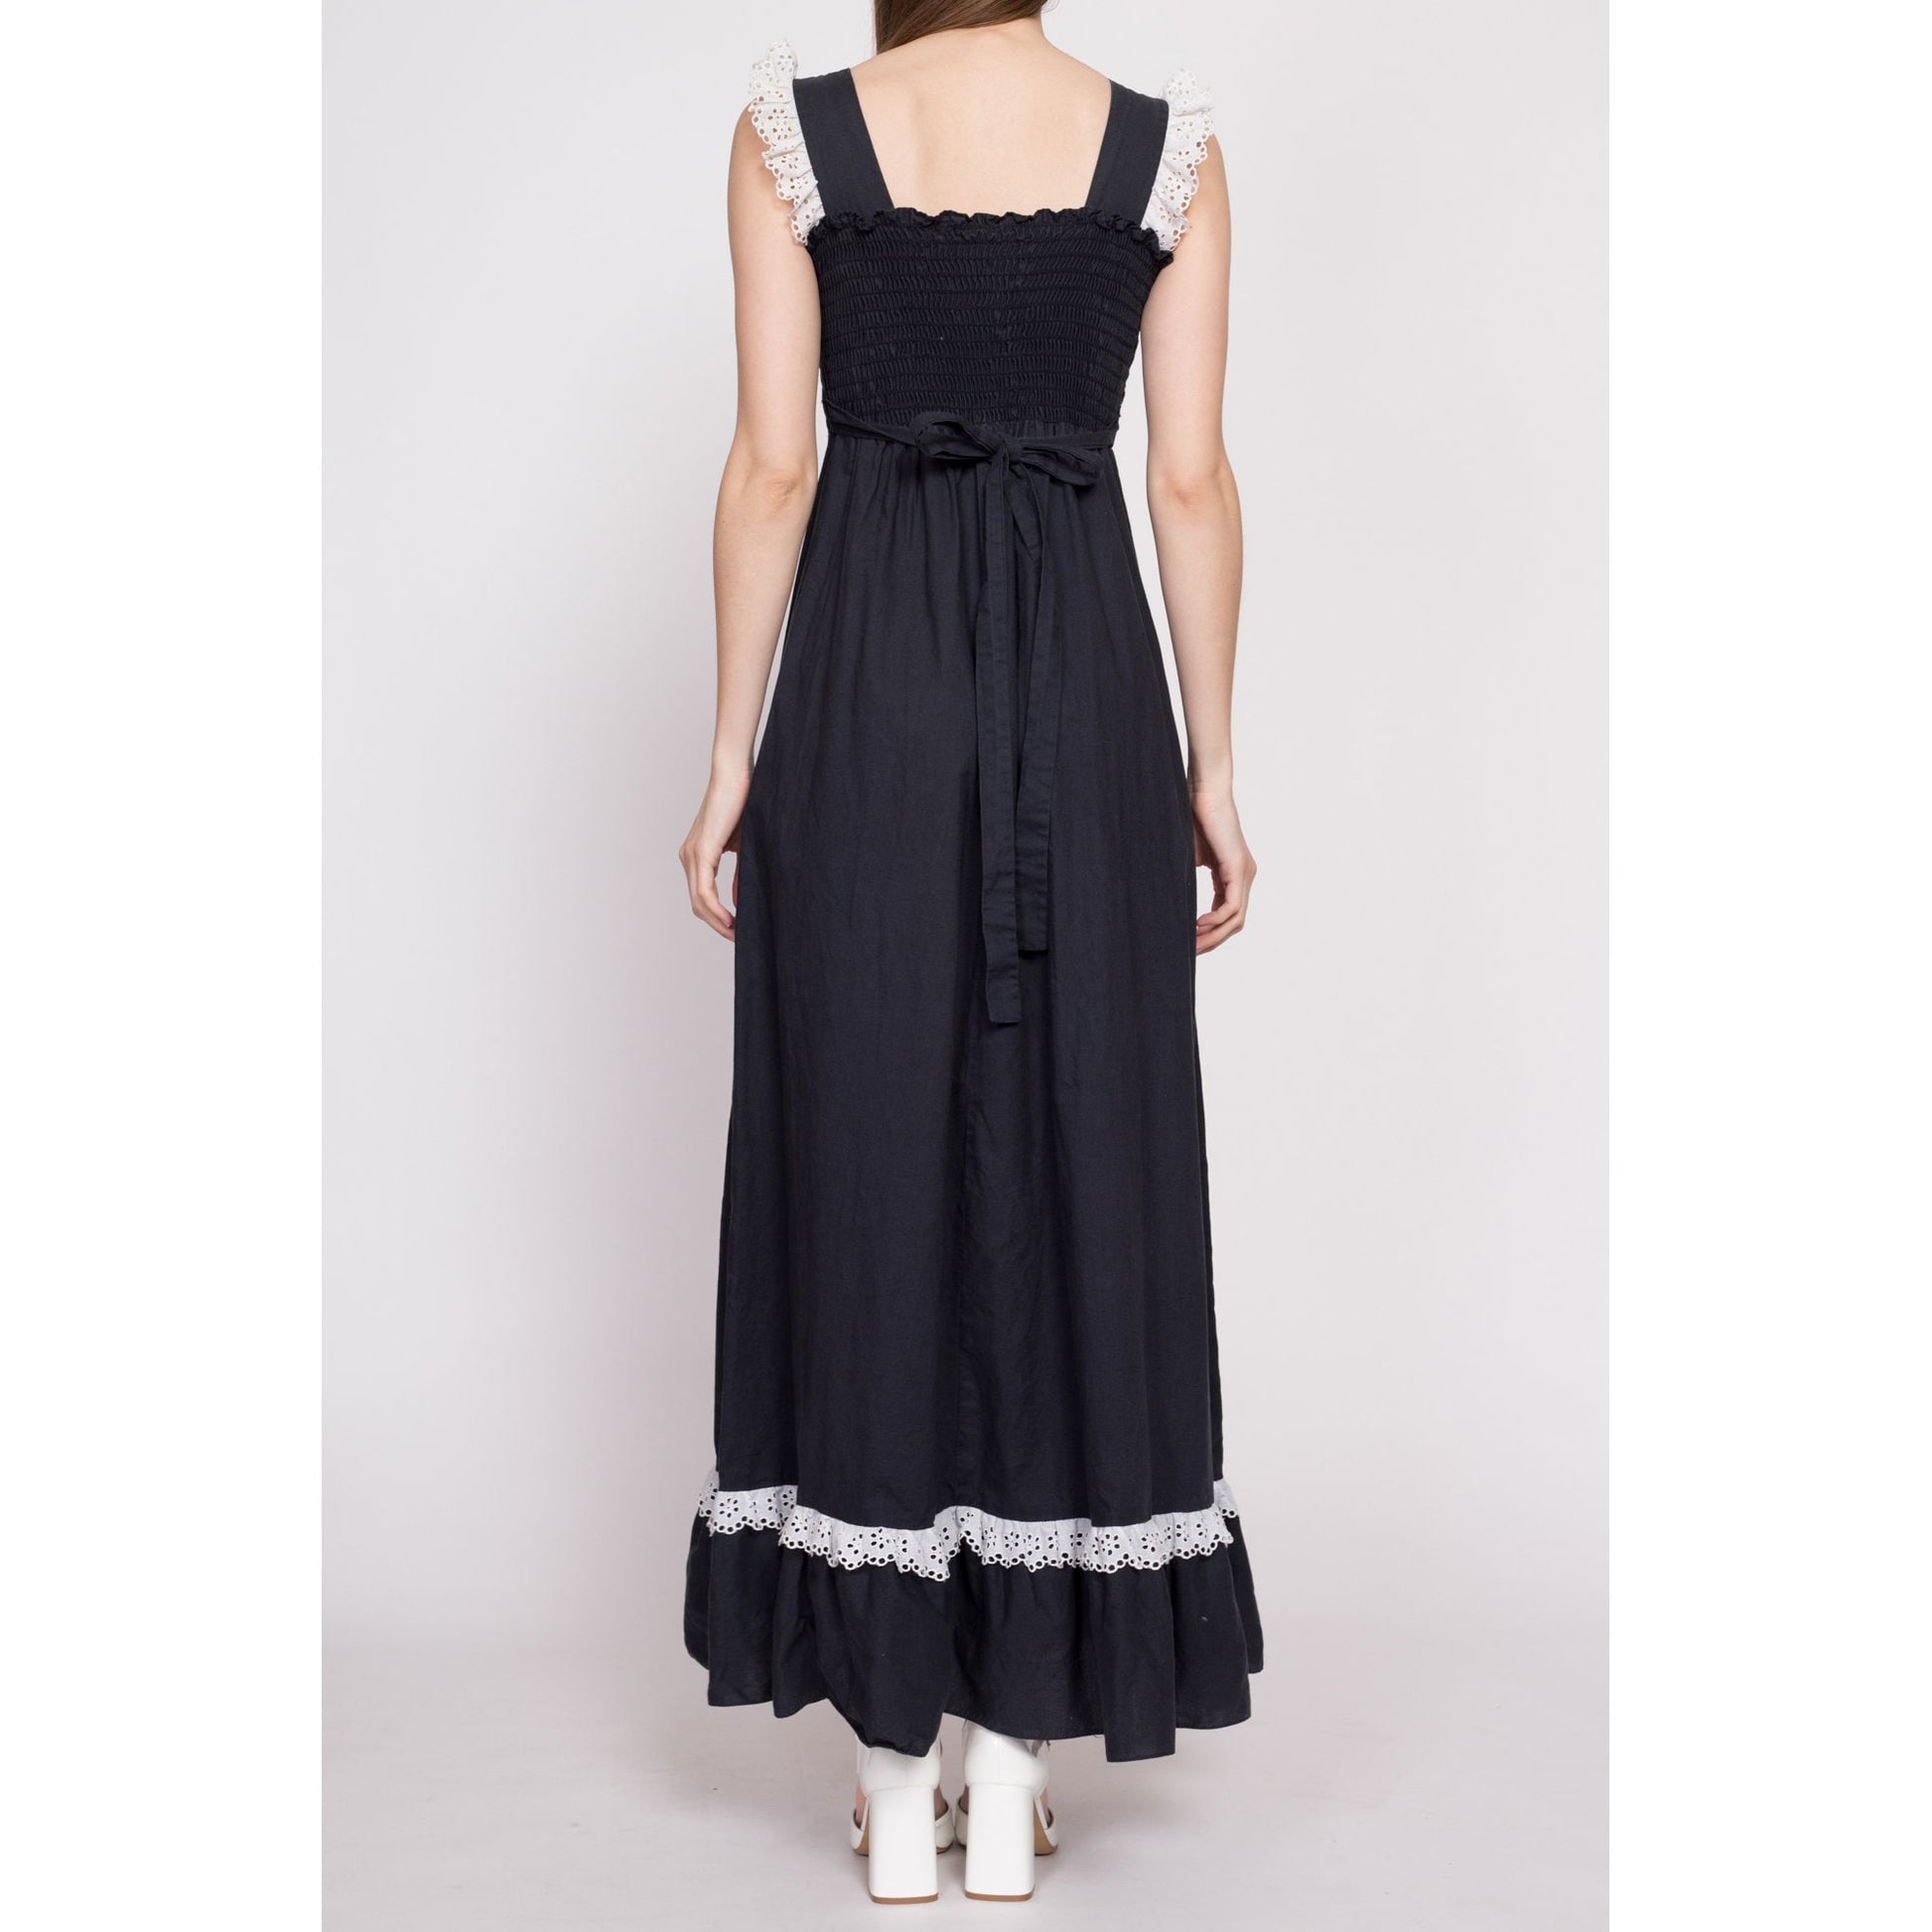 70s Boho Black & White Smocked Maxi Dress - Extra Small | Vintage Lace Trim A Line Long Sundress